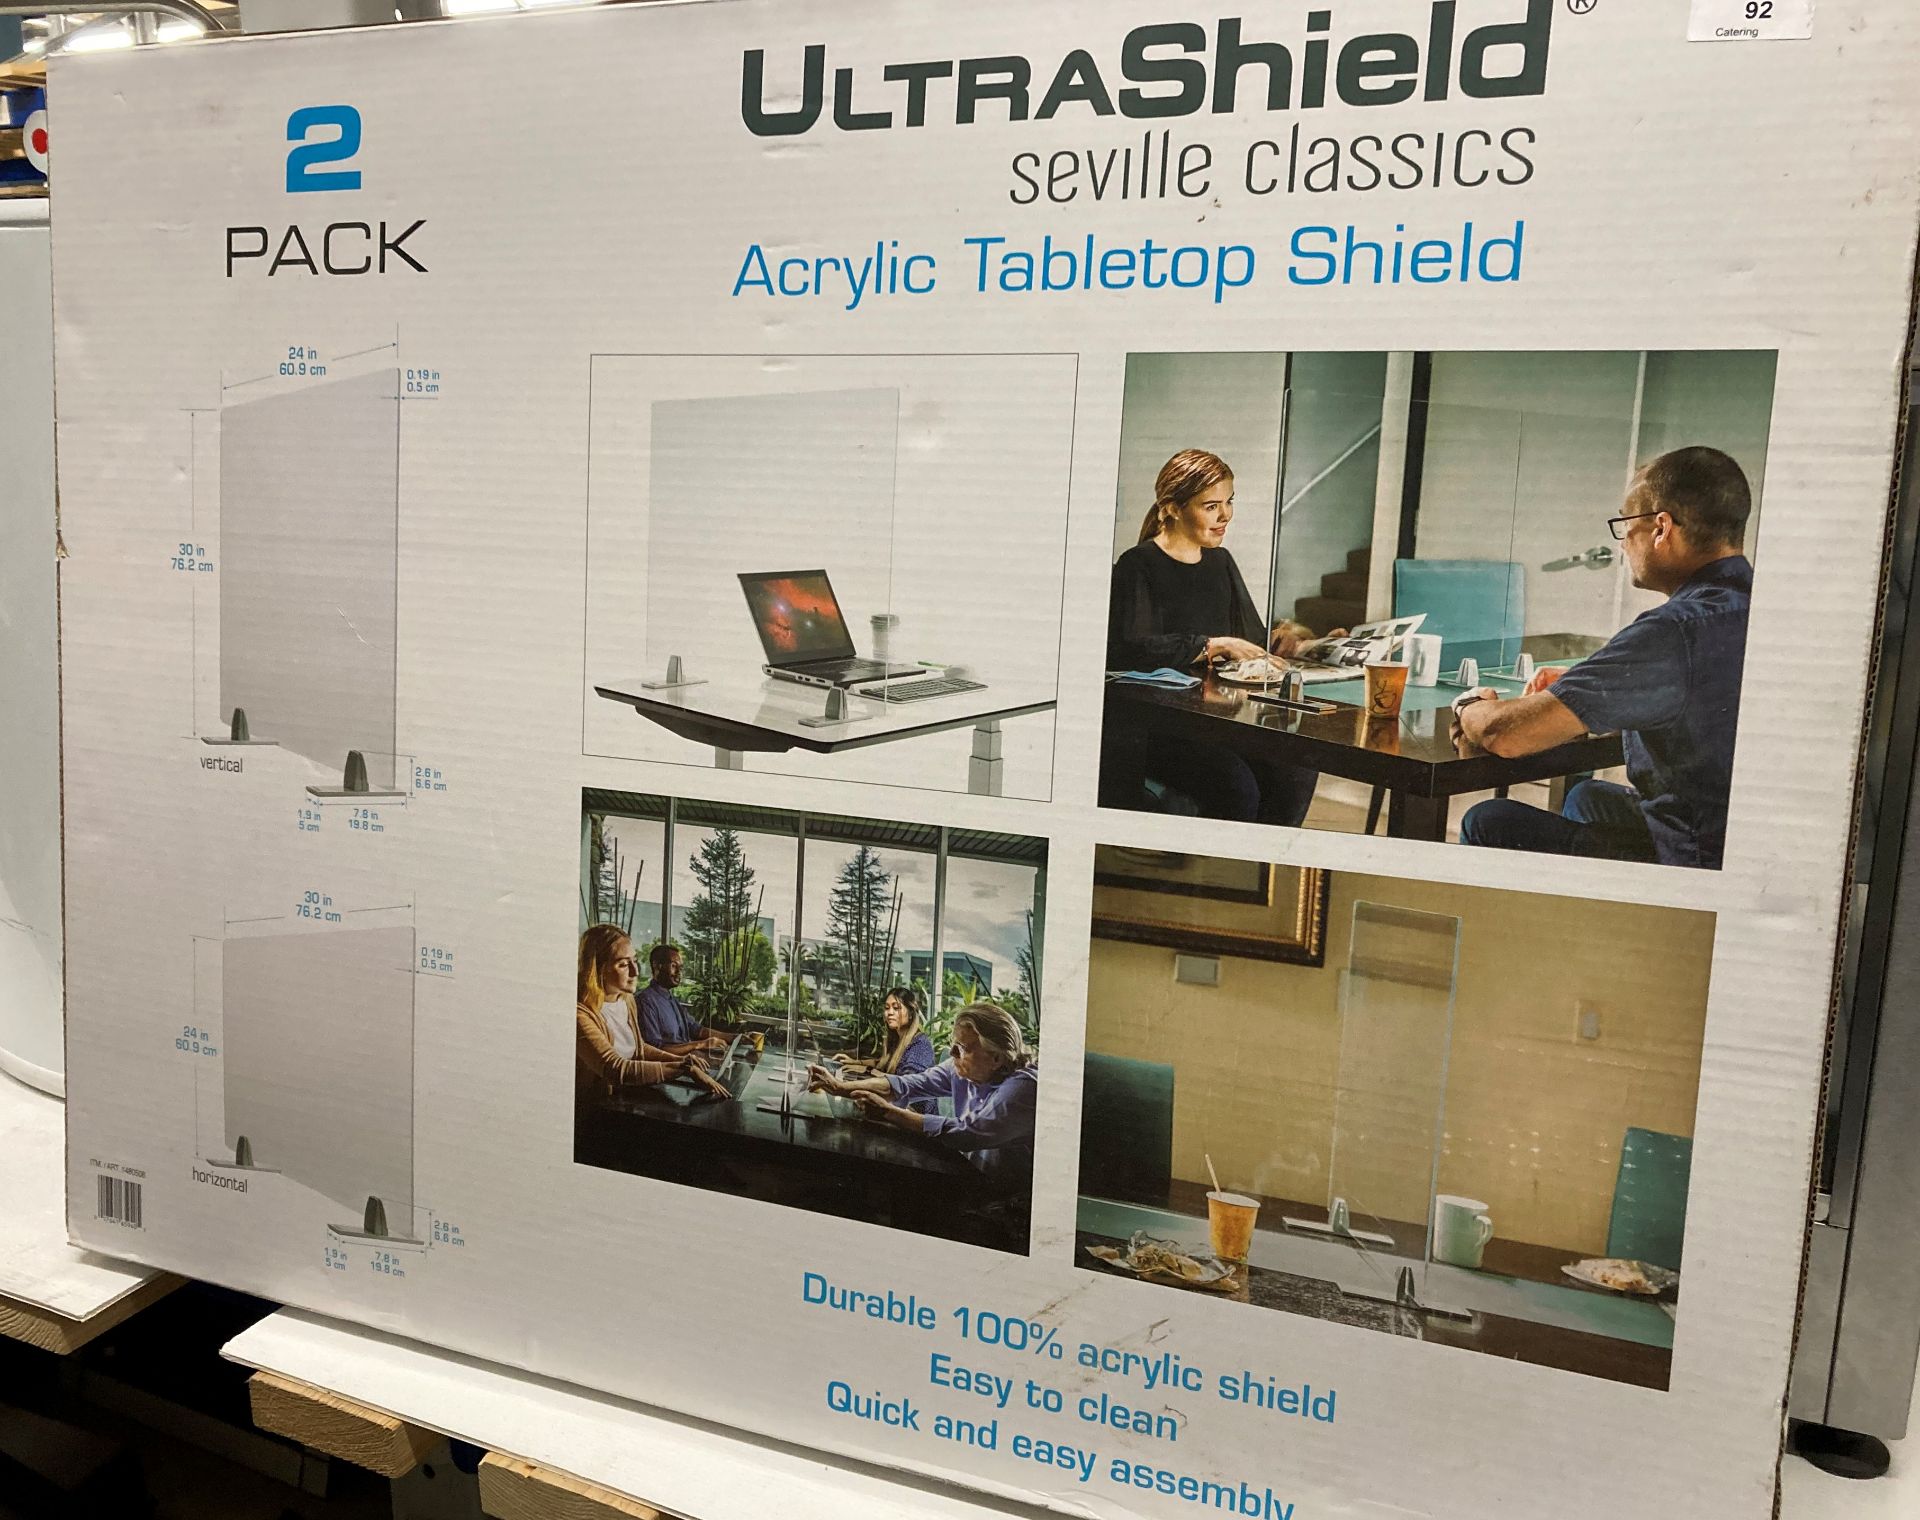 A twin pack of Ultrashield Seville Classics acrylic tabletop shields size 76cm x 60cm (saleroom